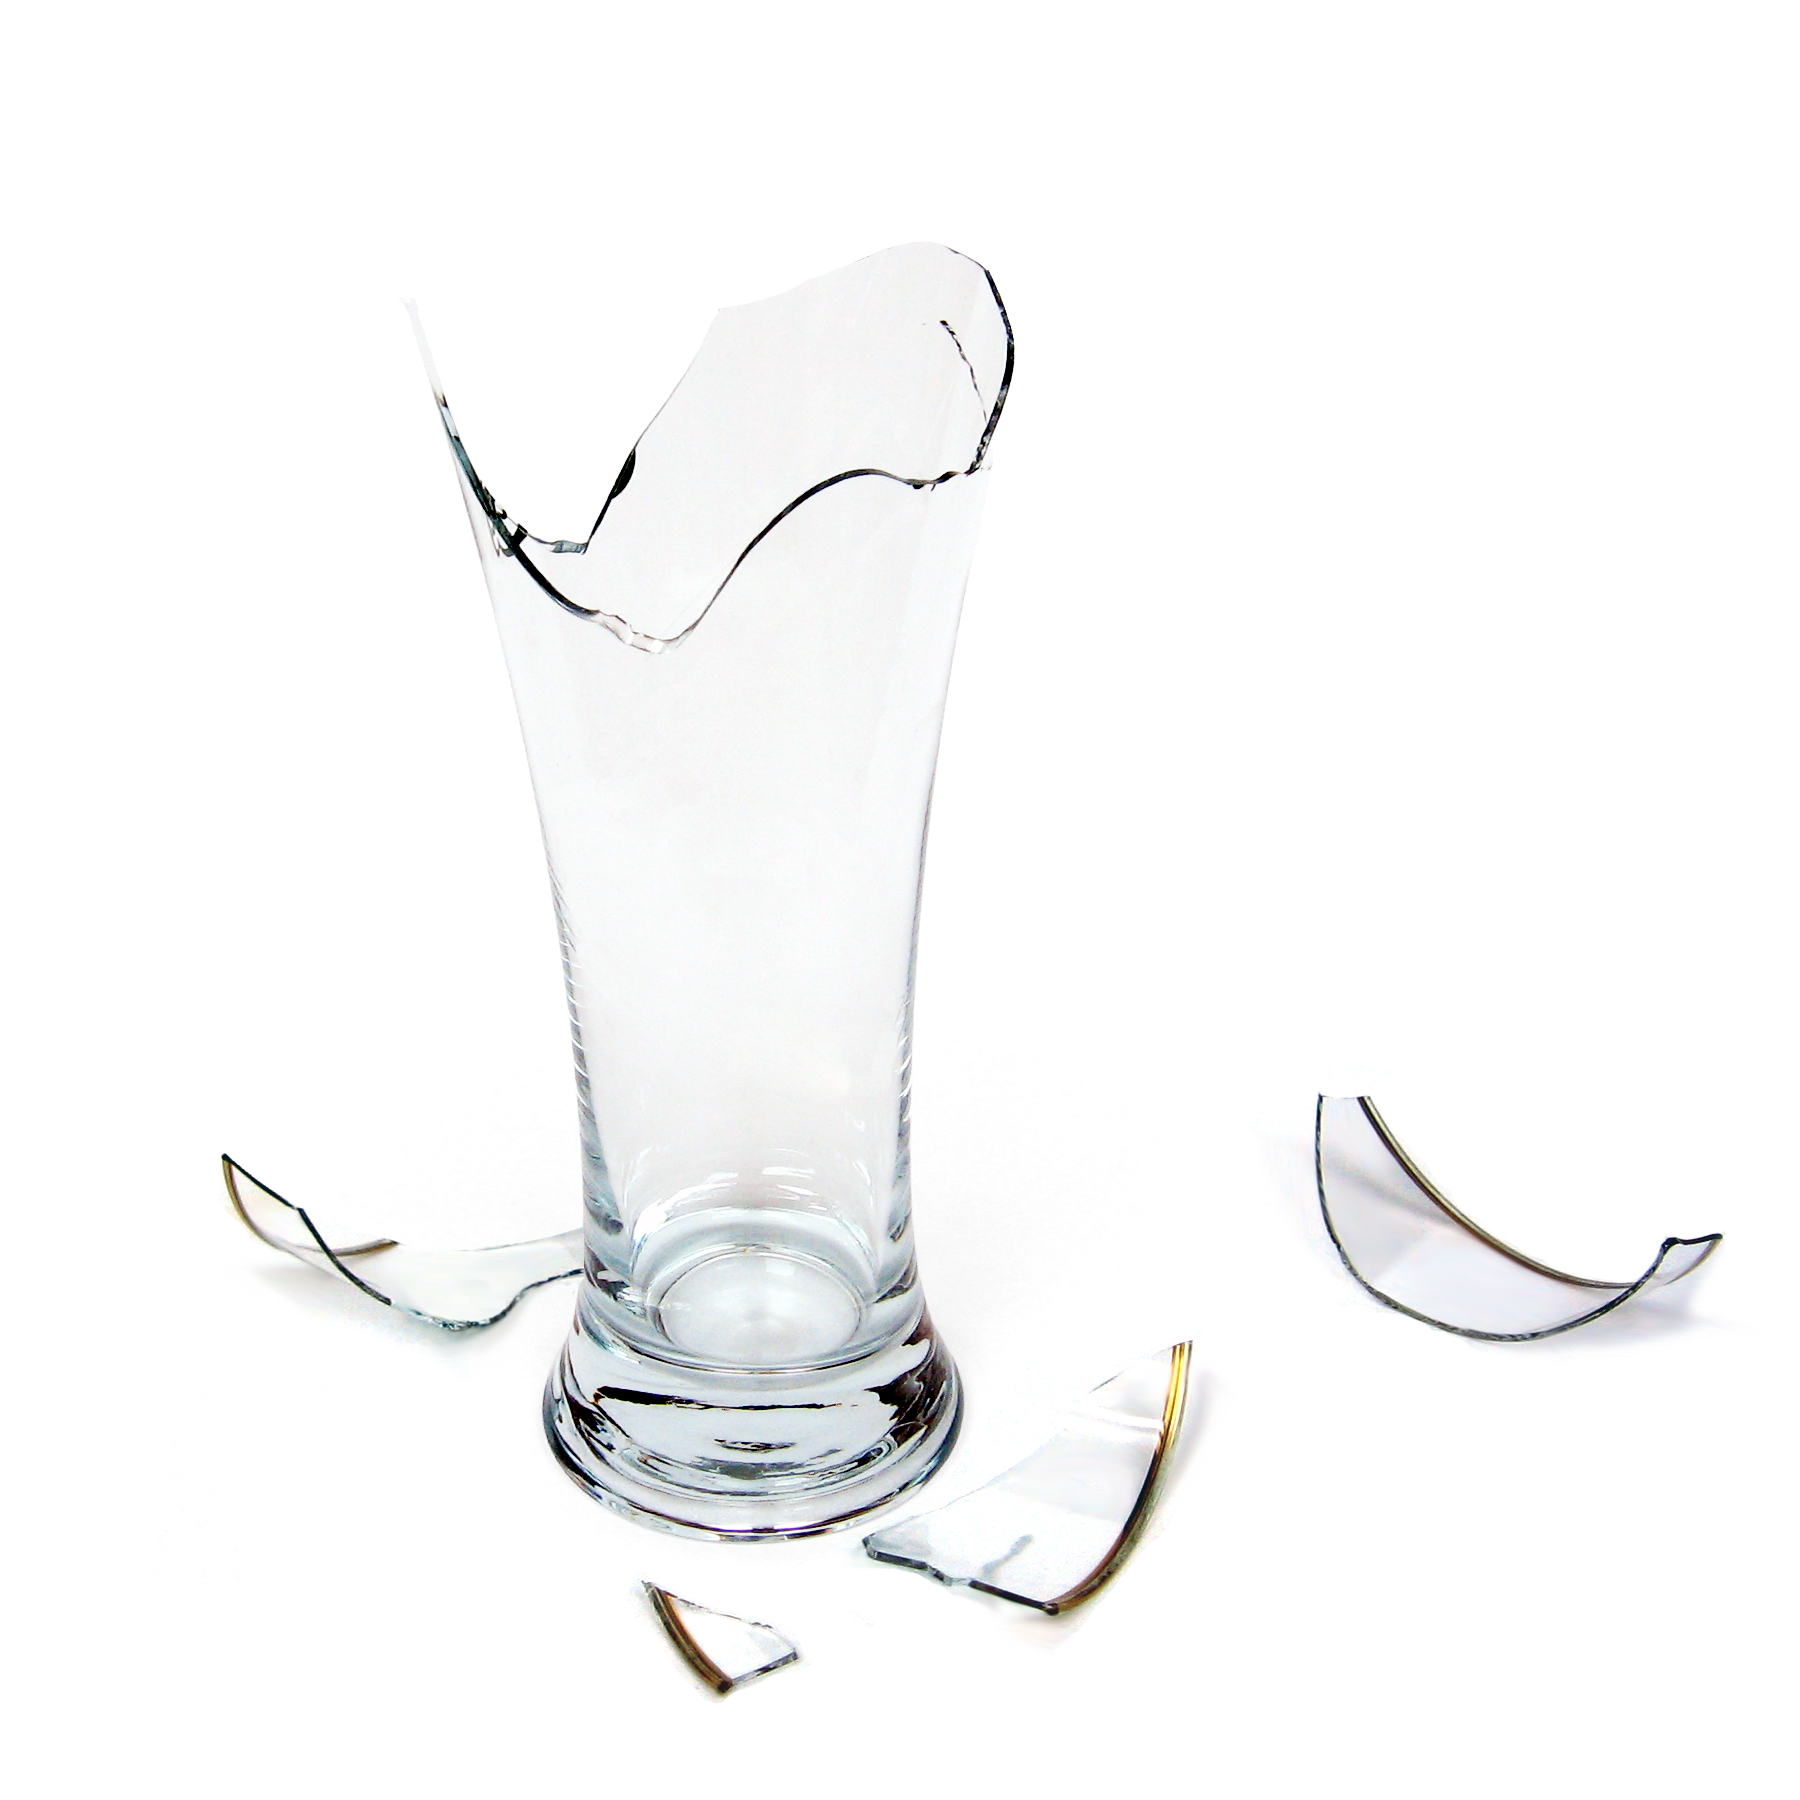 Почему разбитая ваза. Стеклянные предметы. Разбитая стеклянная ваза. Стеклянные предметы разбитые. Разбитый стакан.